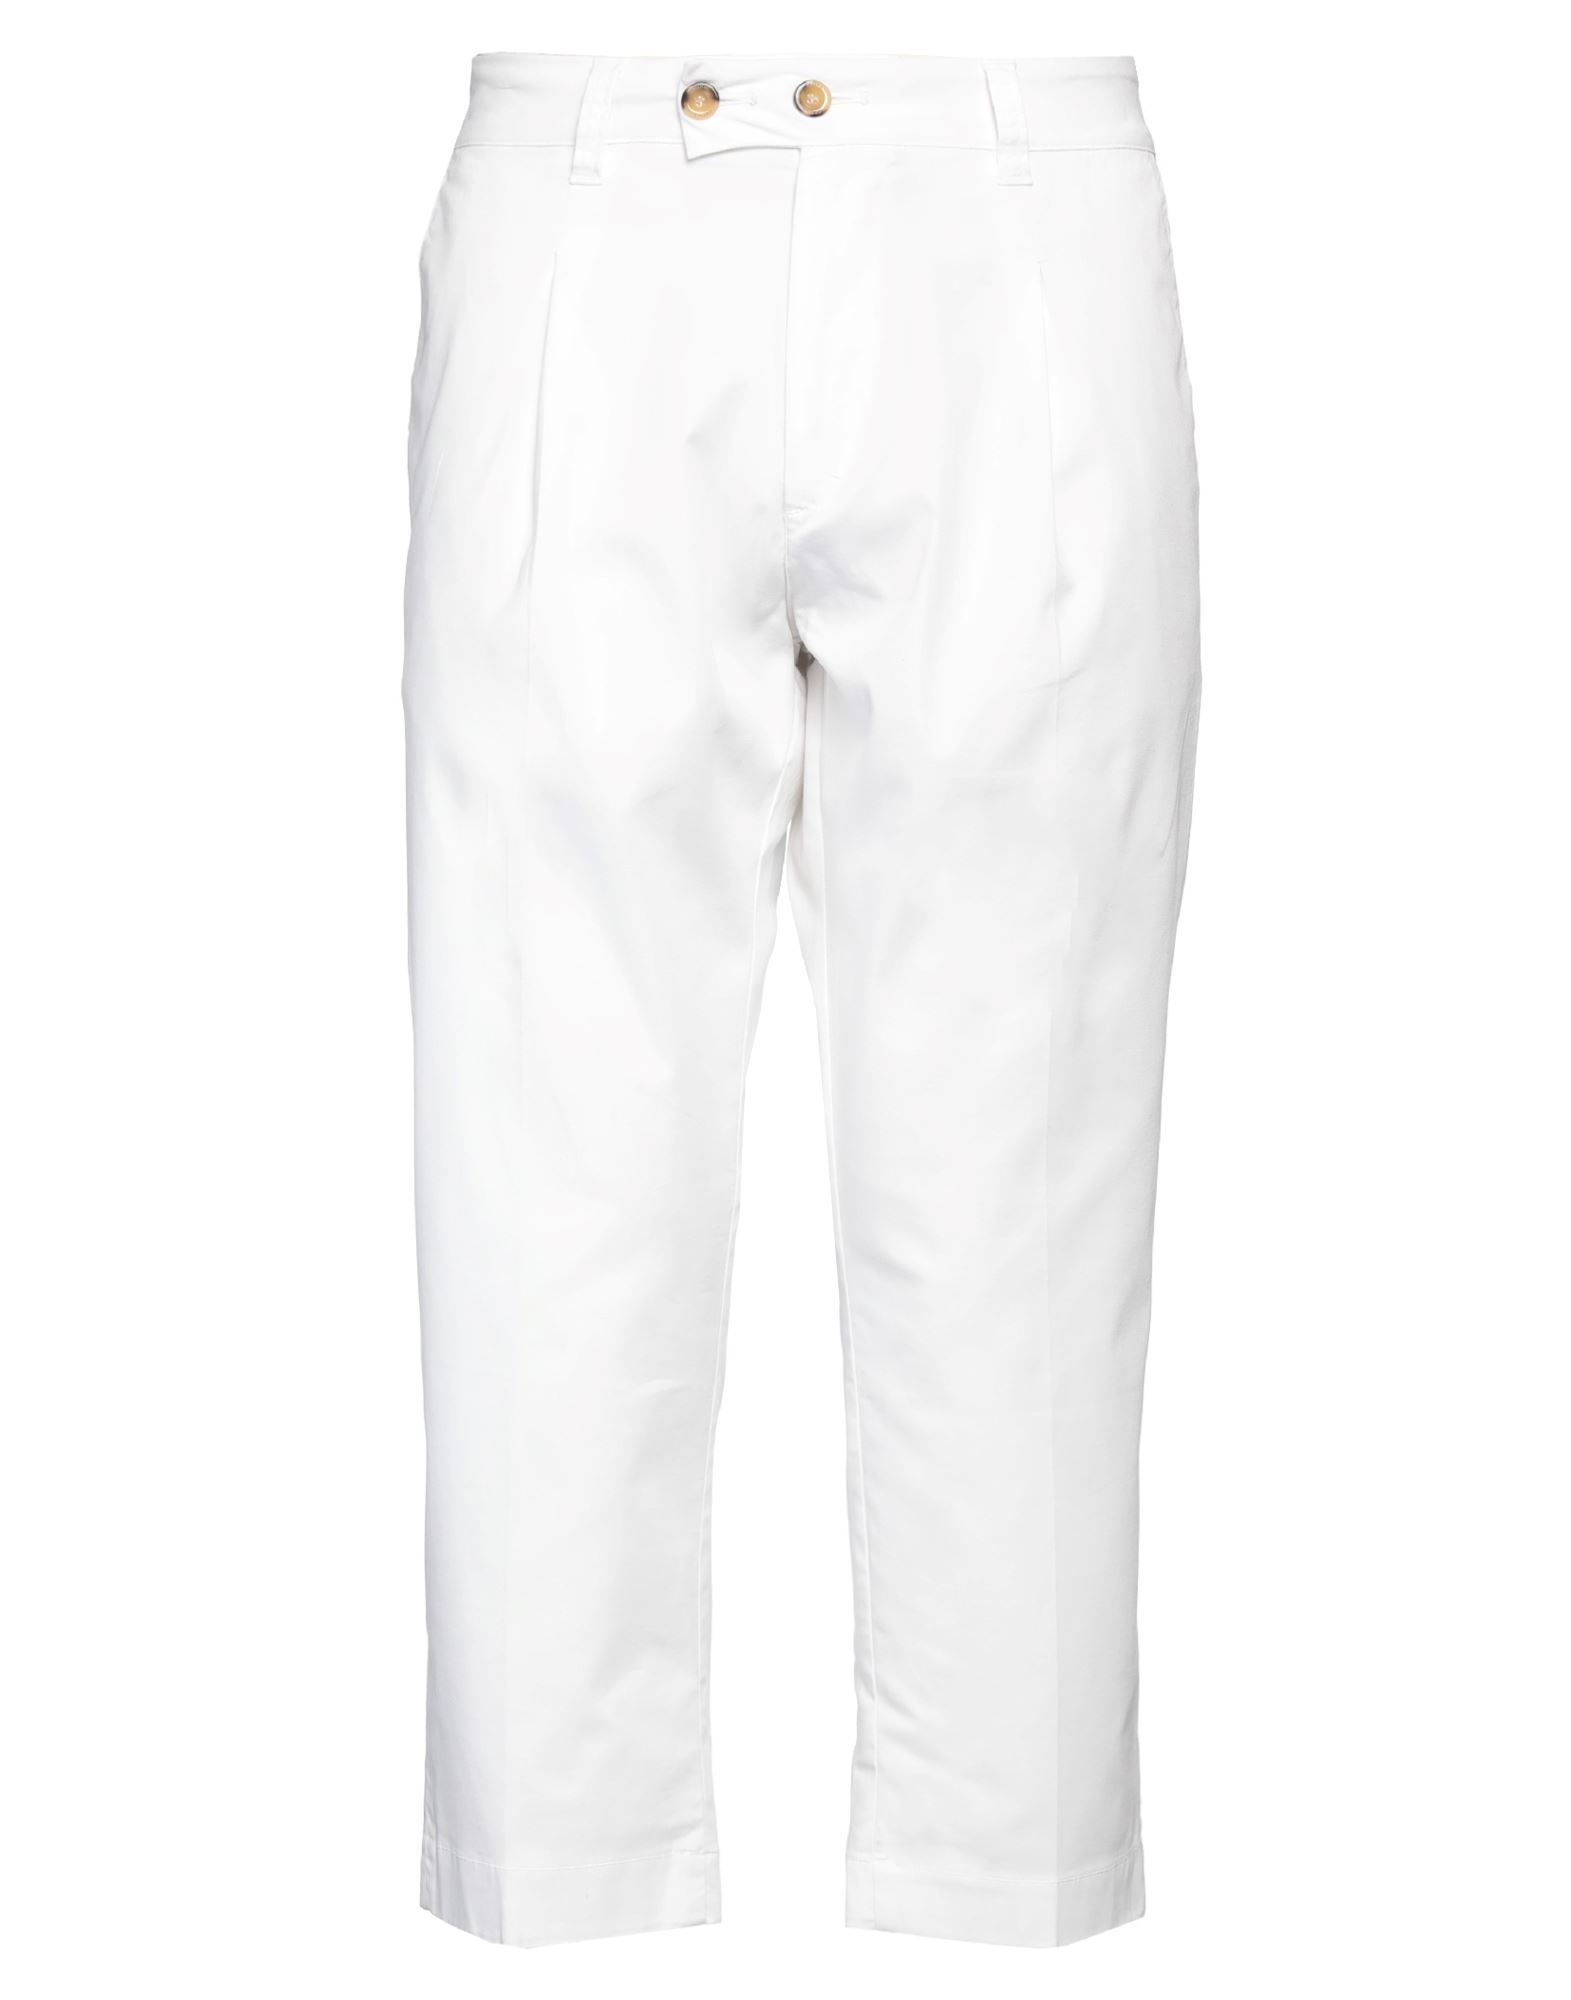 Cruna Cropped Pants In White